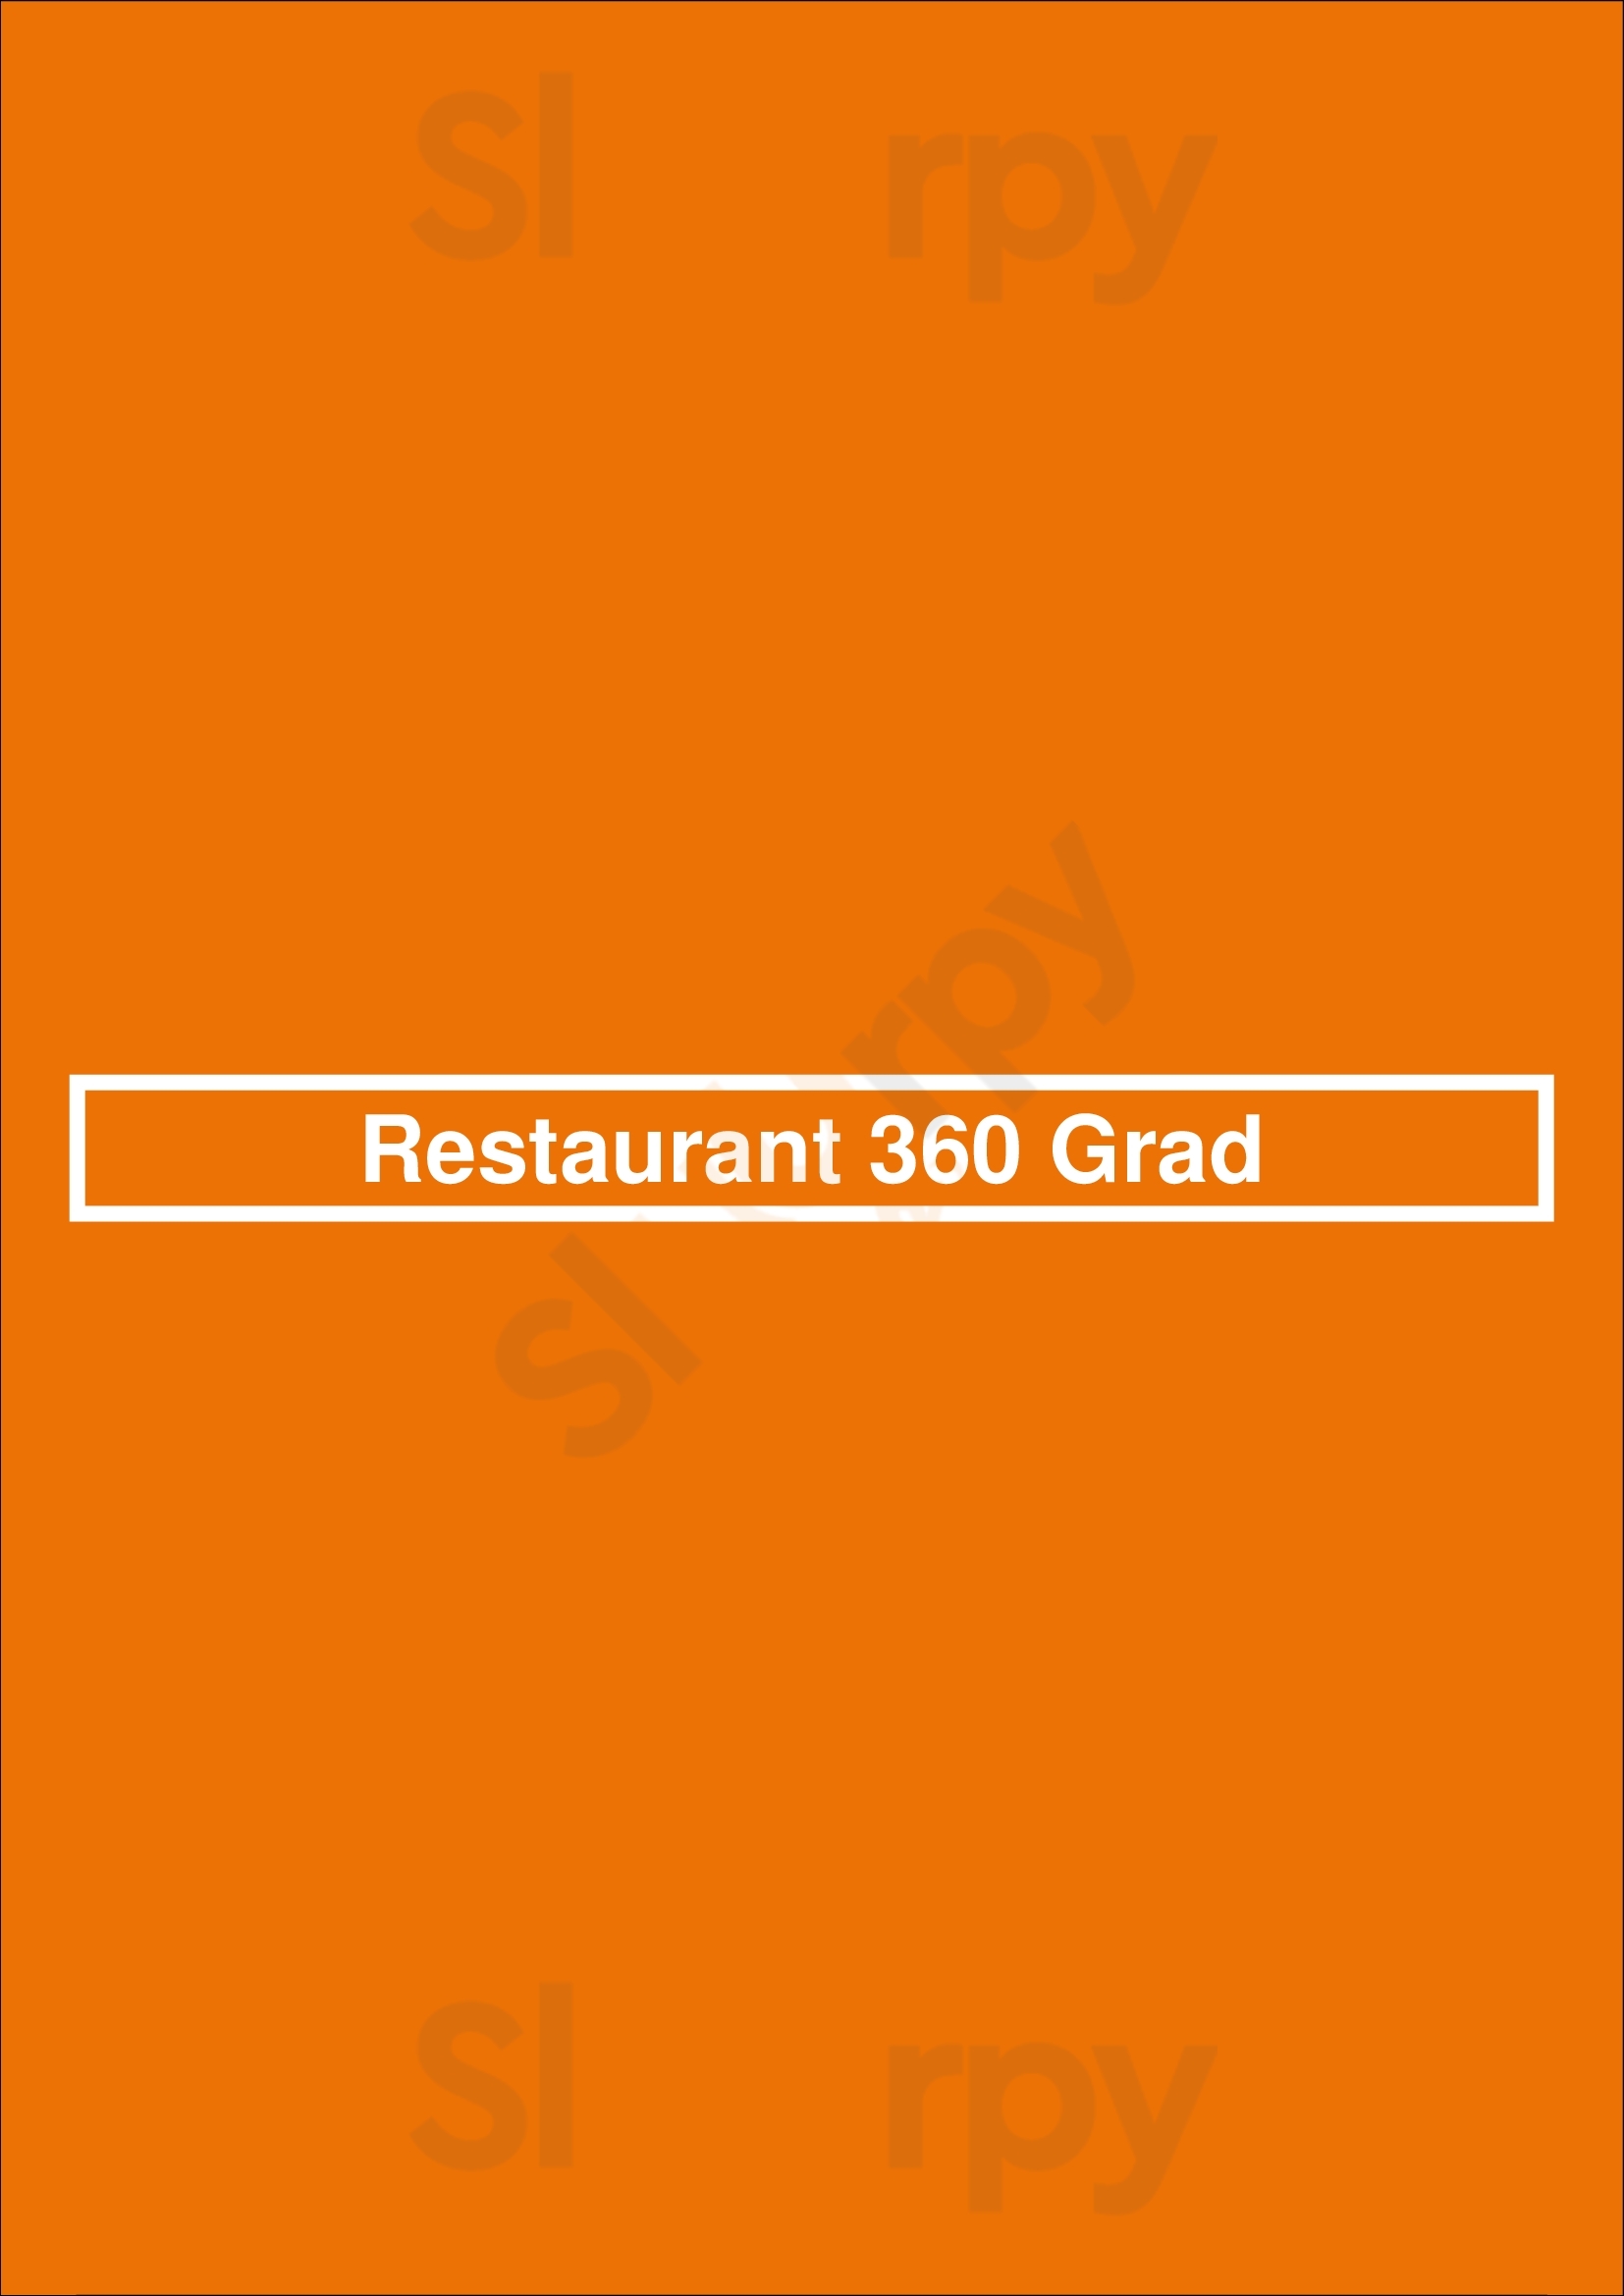 Restaurant 360 Grad Limburg Menu - 1